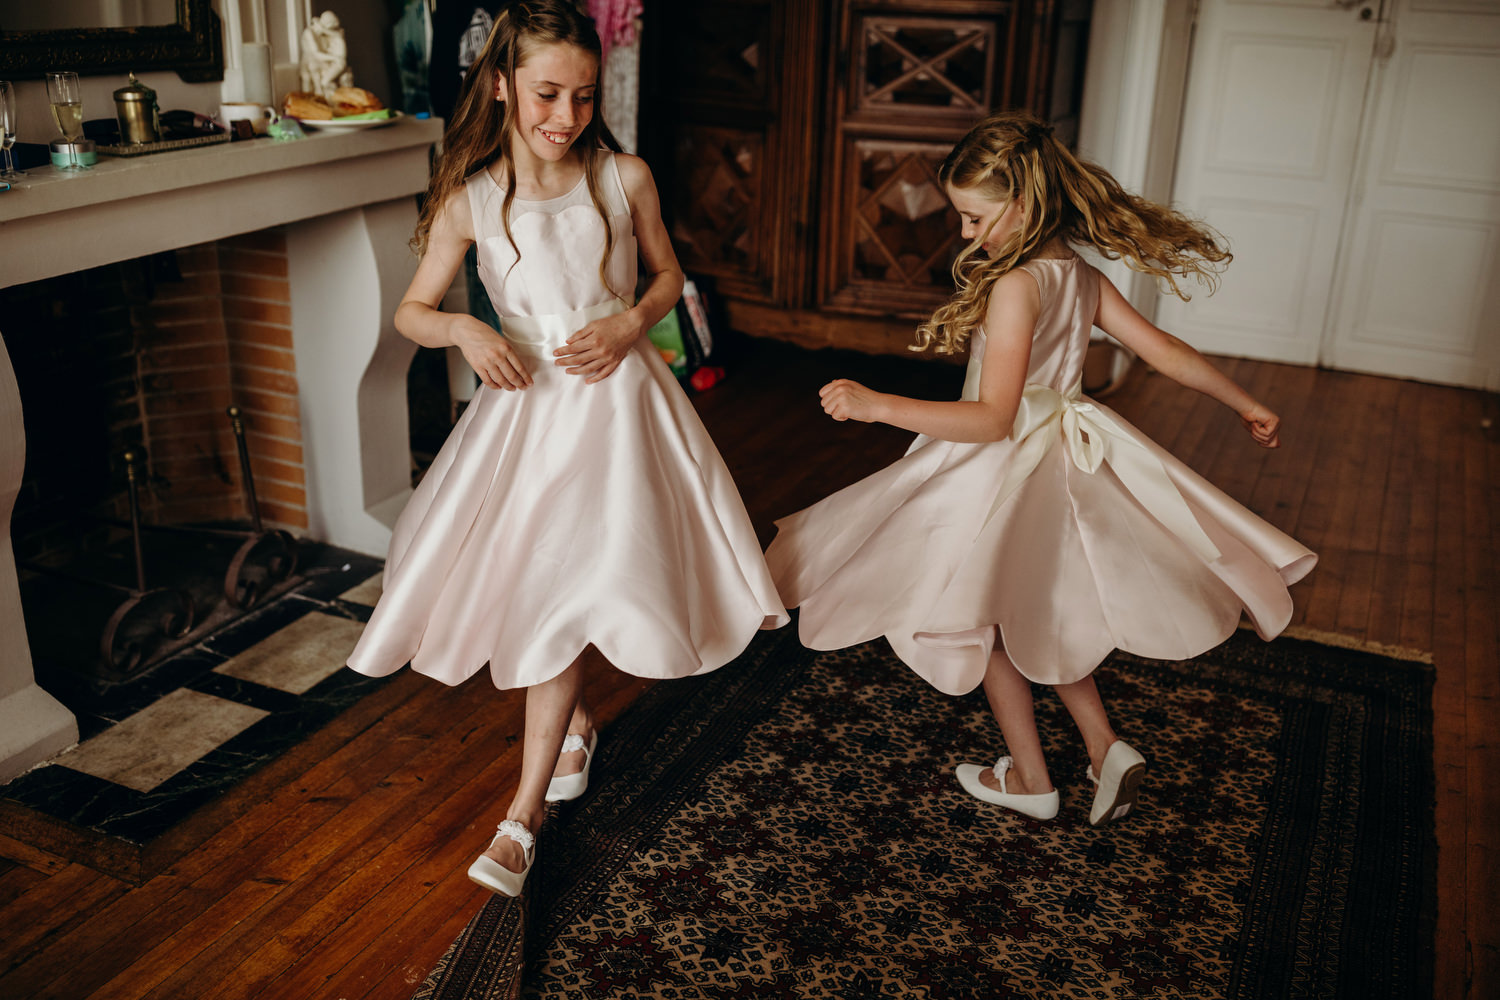 flower girls spin in their wedding dresses